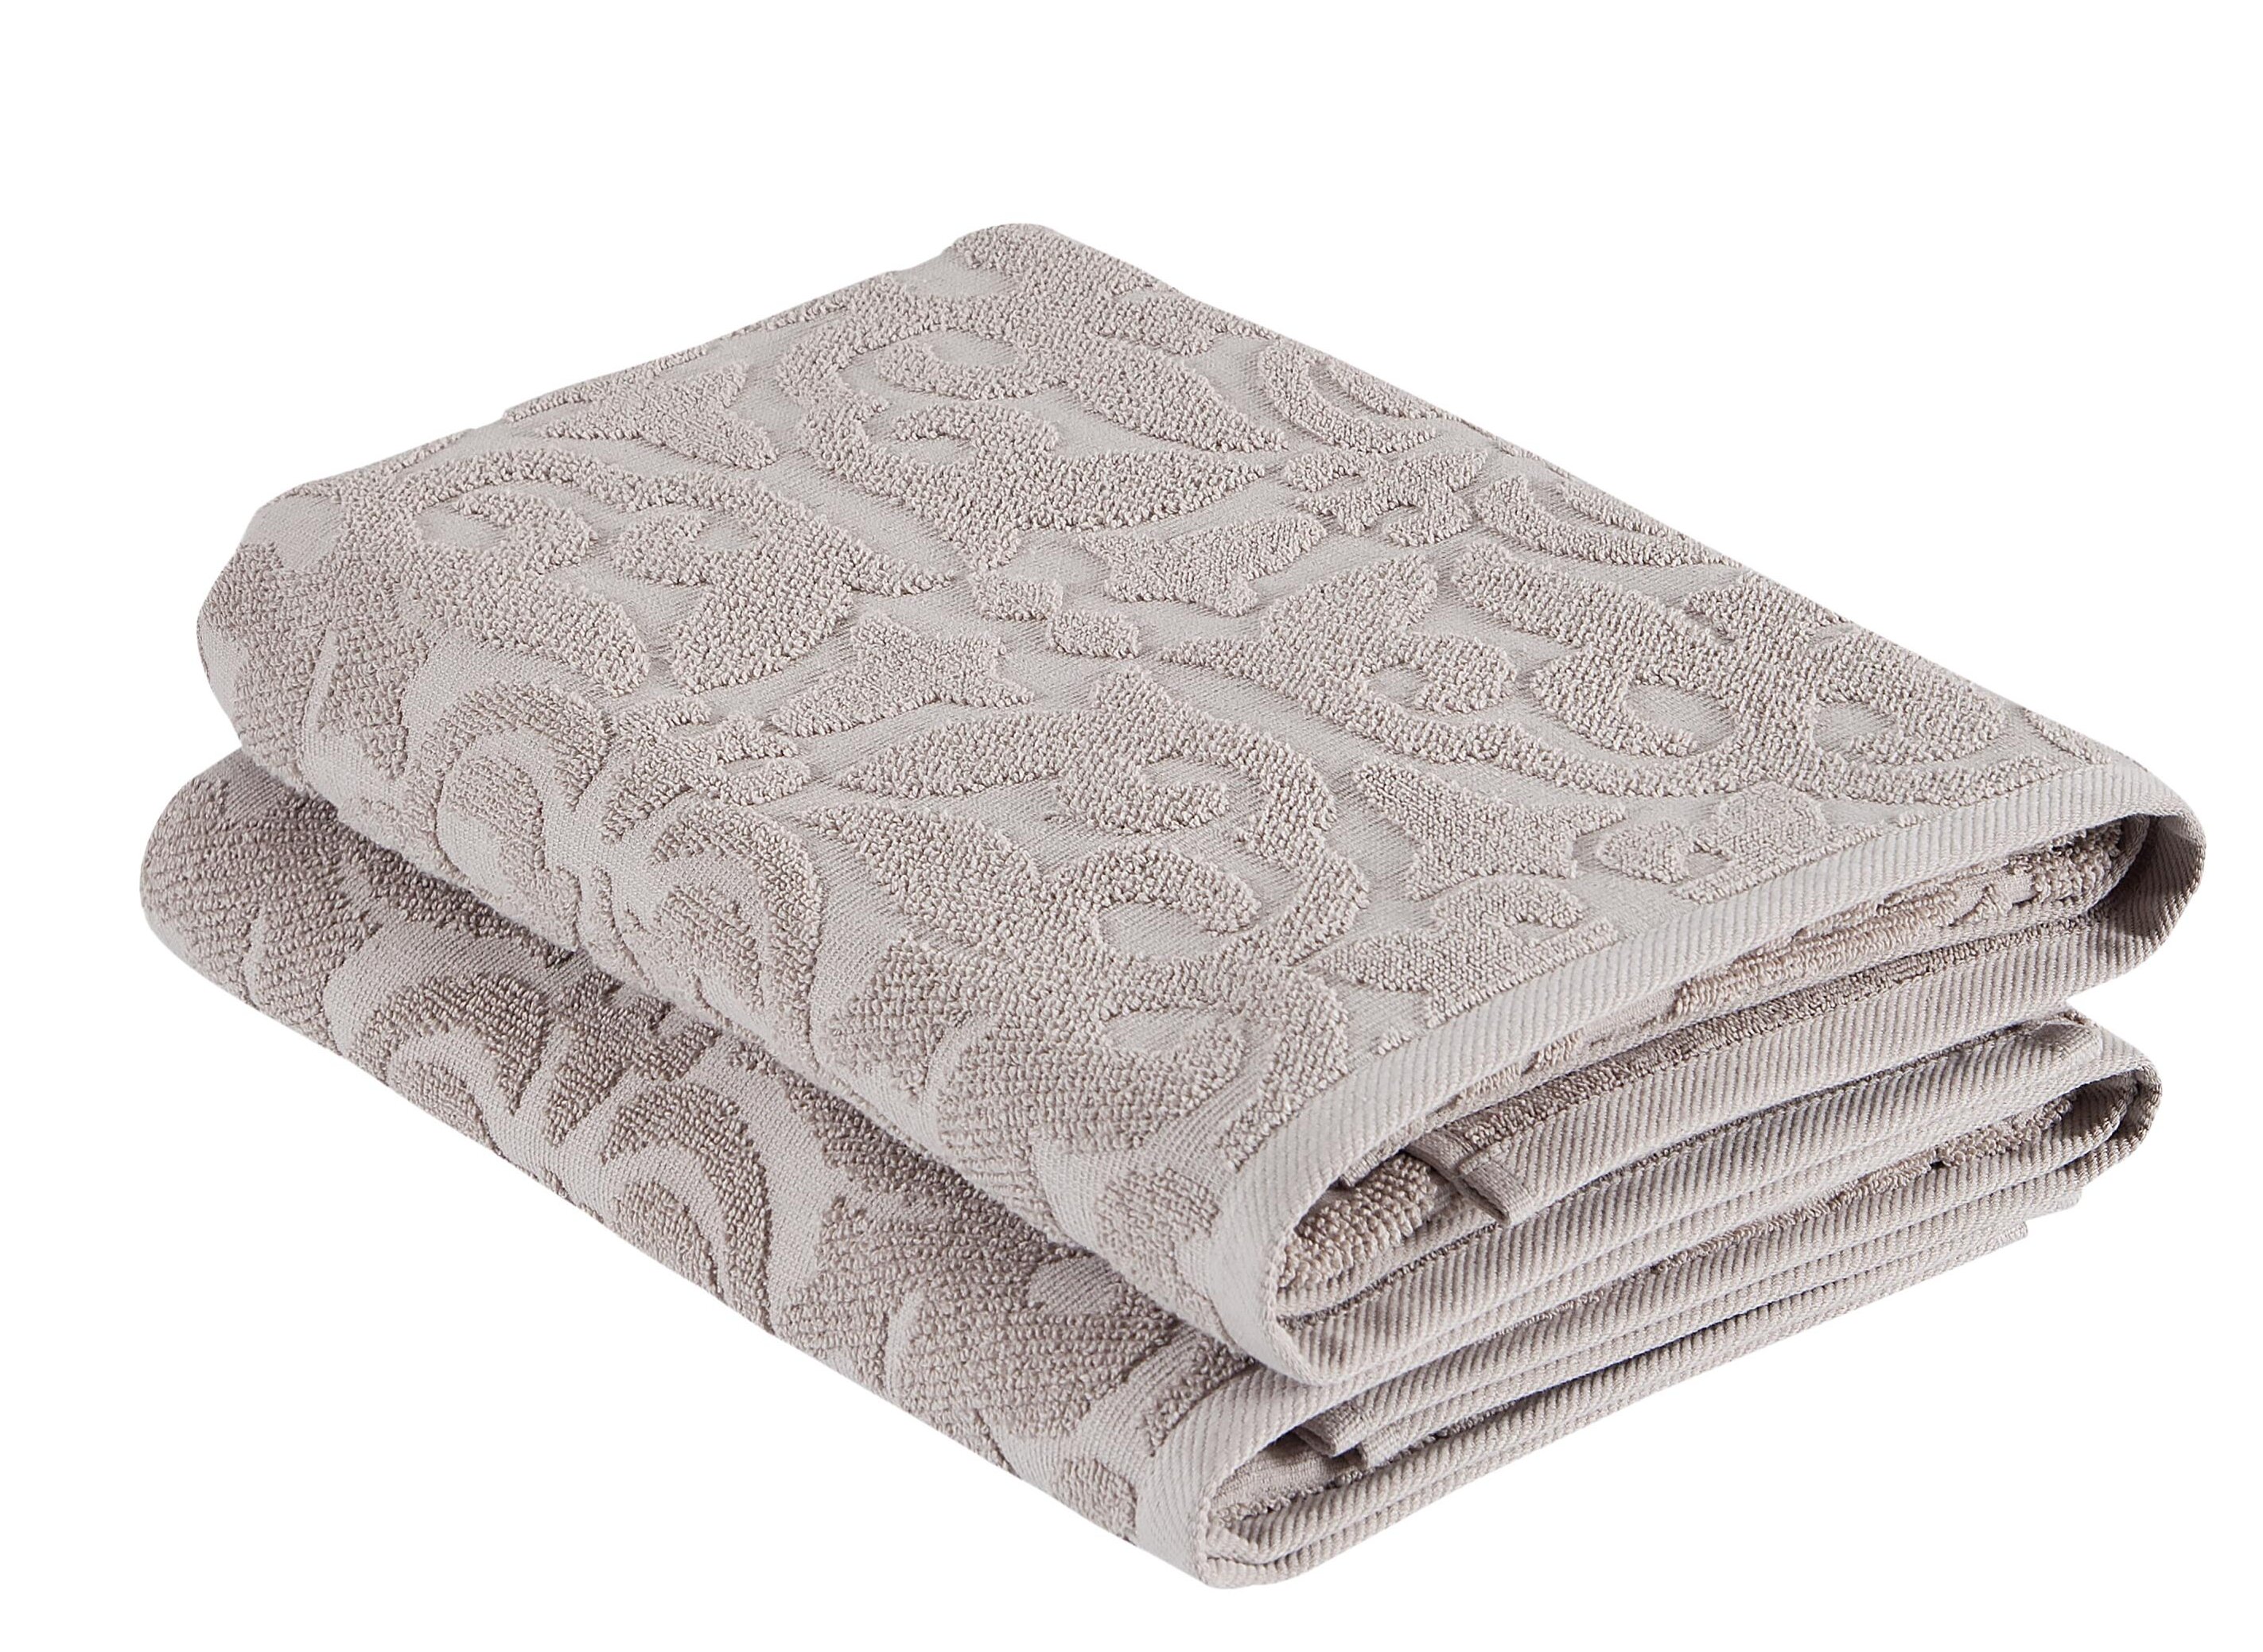 Enchante Home Glossy Turkish Cotton 8-Pc. Hand Towel Set - Sand